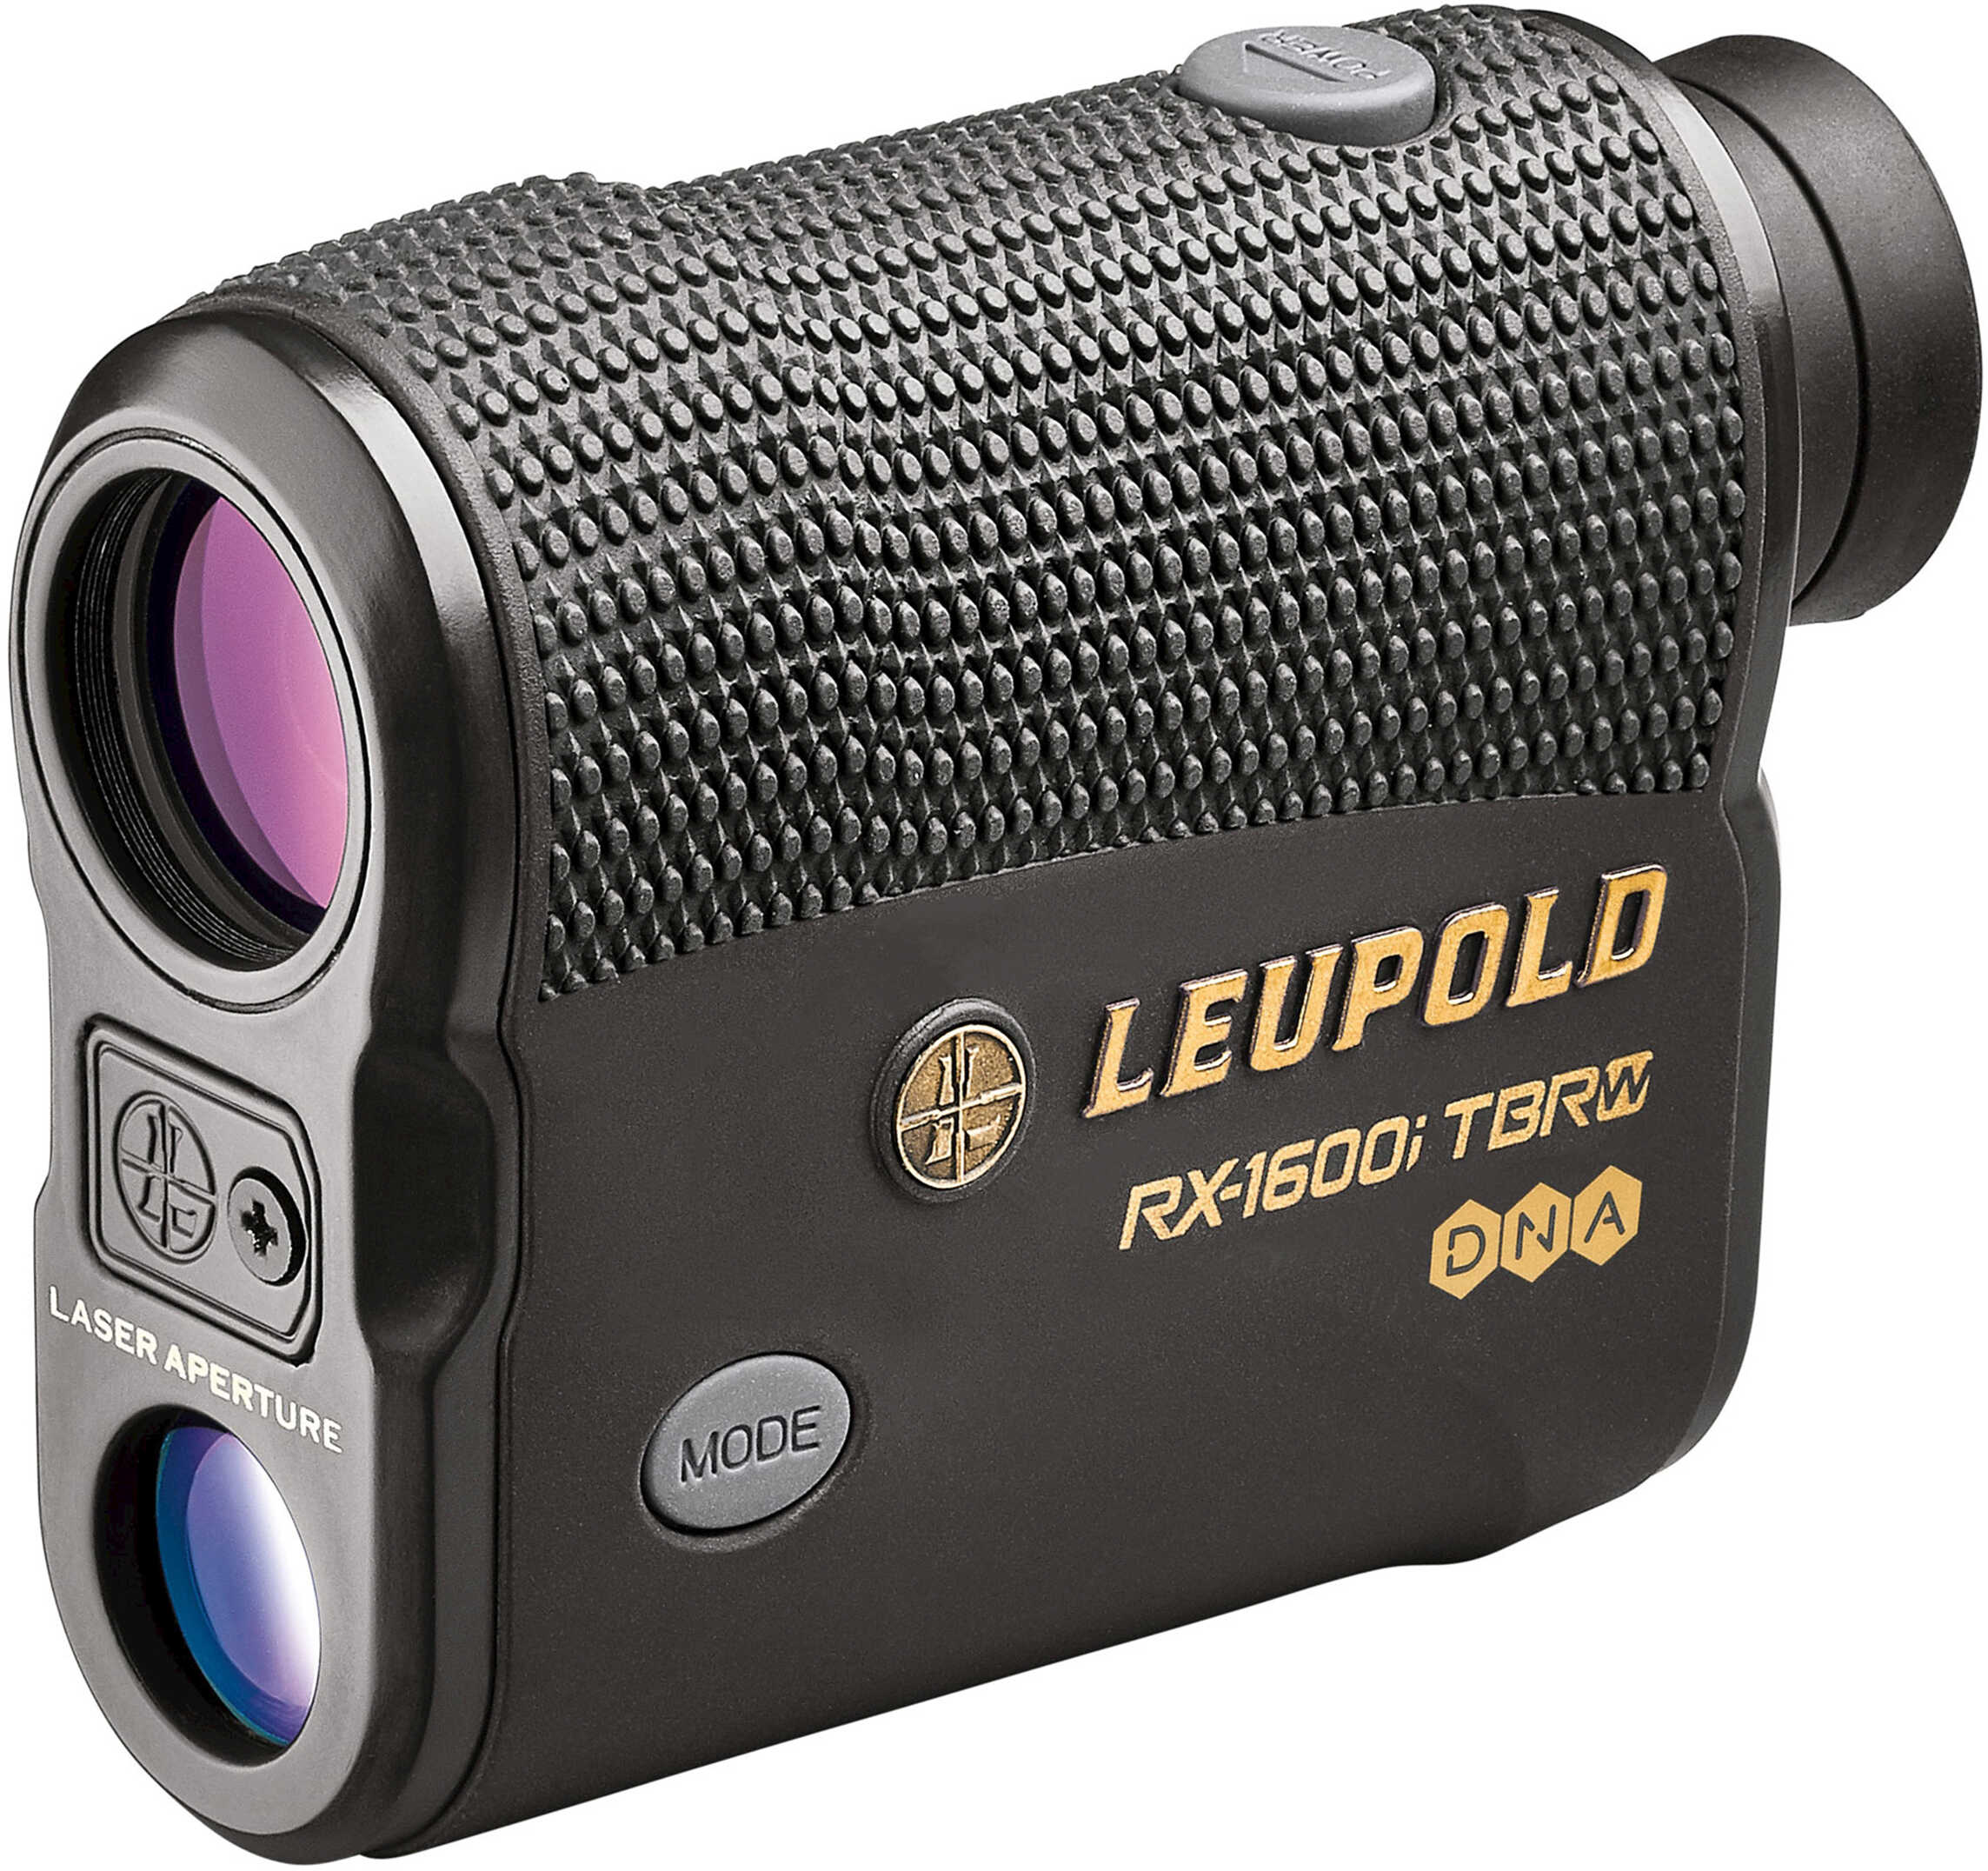 Leupold RX-1600I TBR With DNA Laser Rangefinder Black and Gray In Color 6x Magnification Model 173805